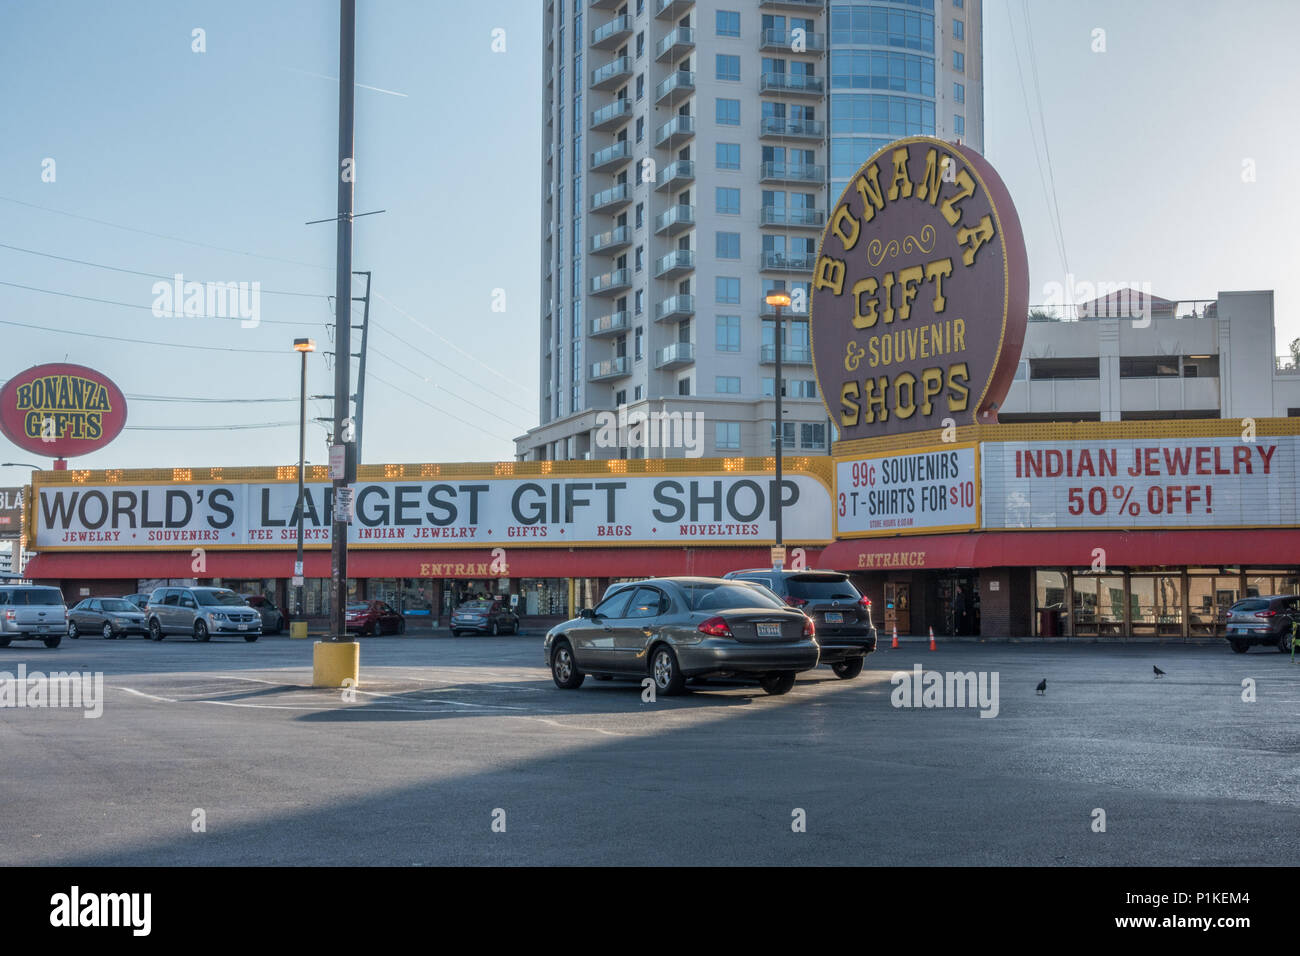 World's largest gift shop in Las Vegas, NV, USA Stock Photo - Alamy